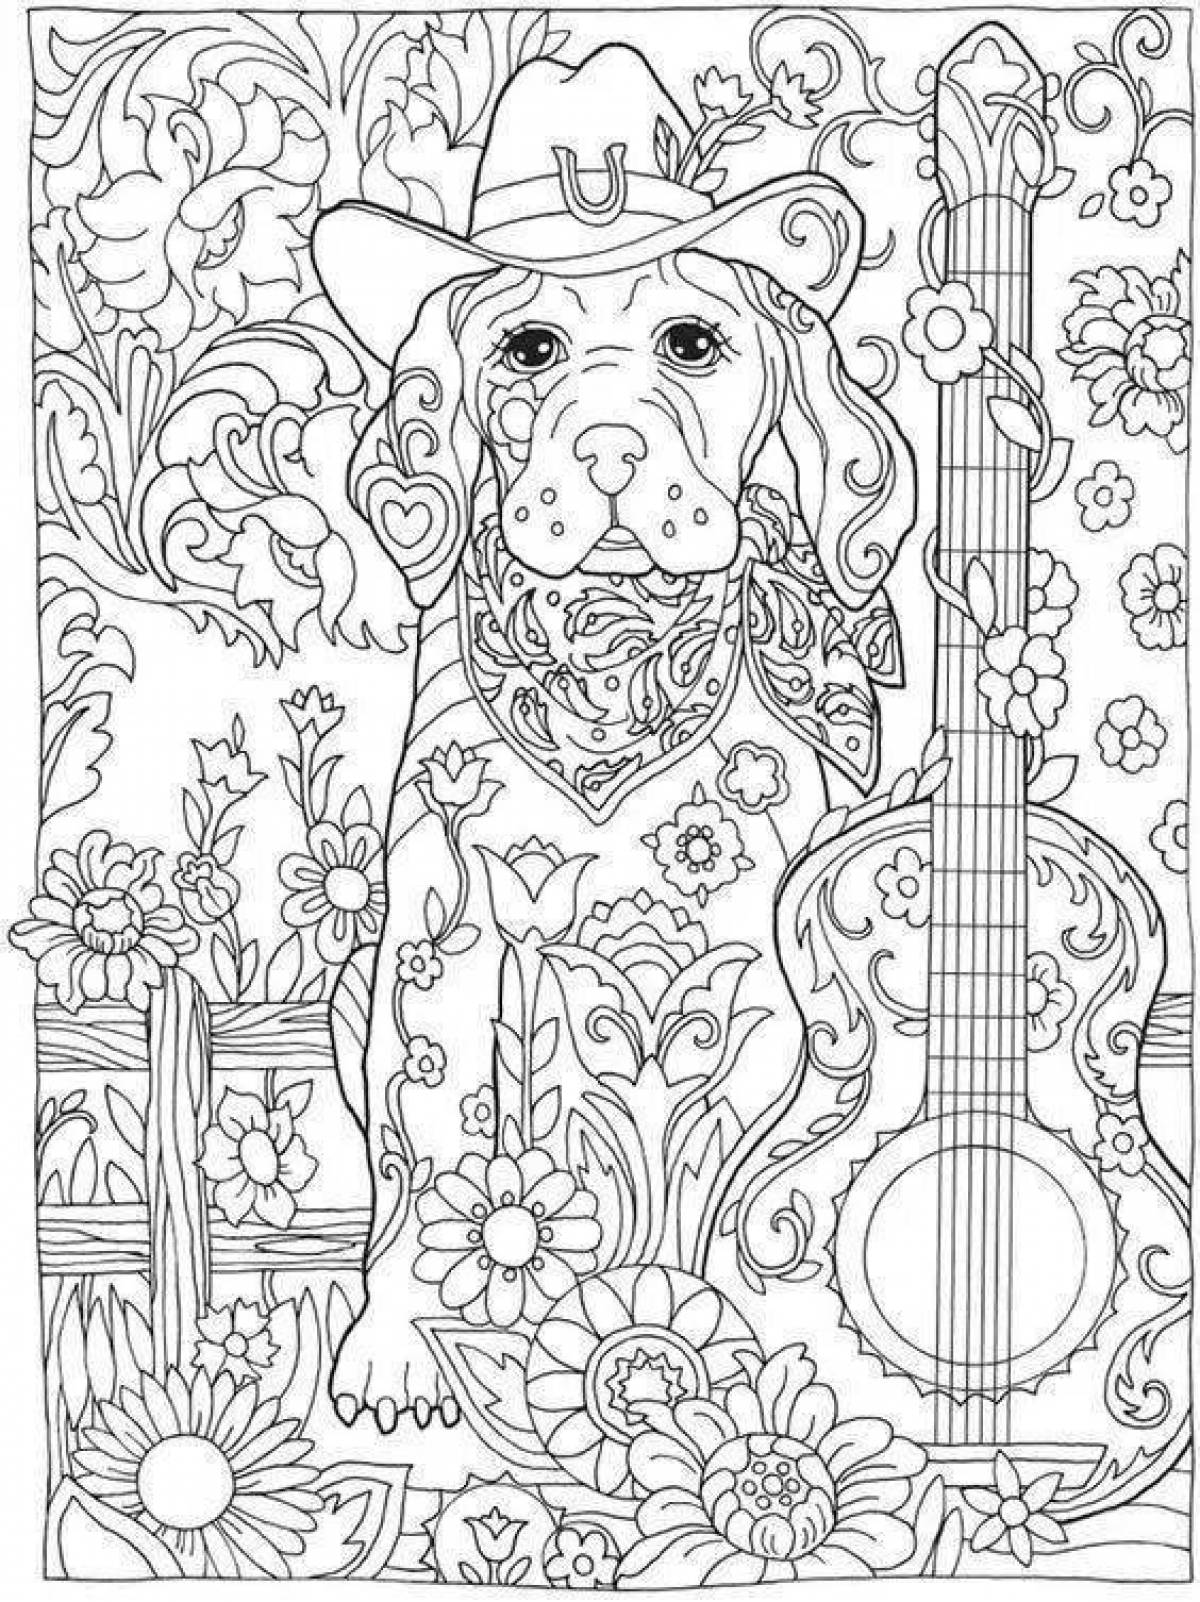 Adorable anti-stress dog coloring book